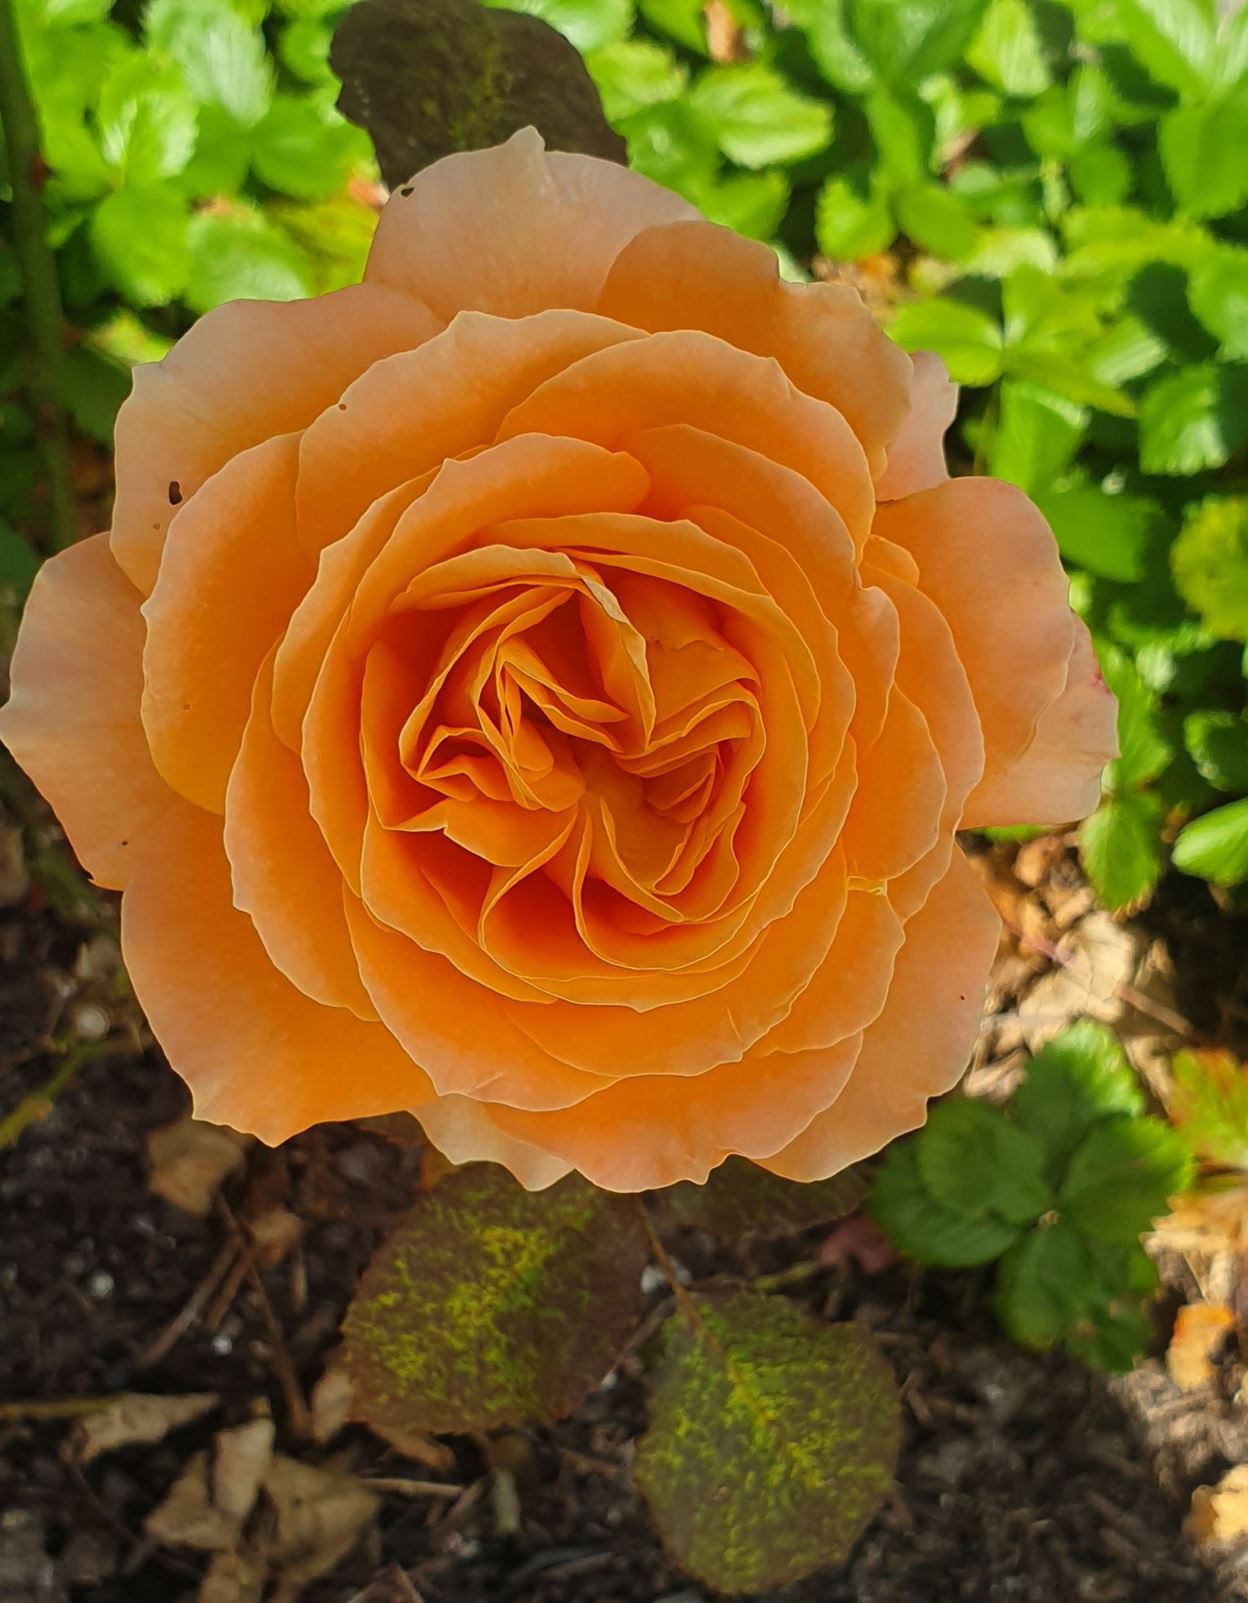 Rosa (Terosehybrider (HT) Group) 'Flora Danica' - 'Garden News', 'POUlrim'